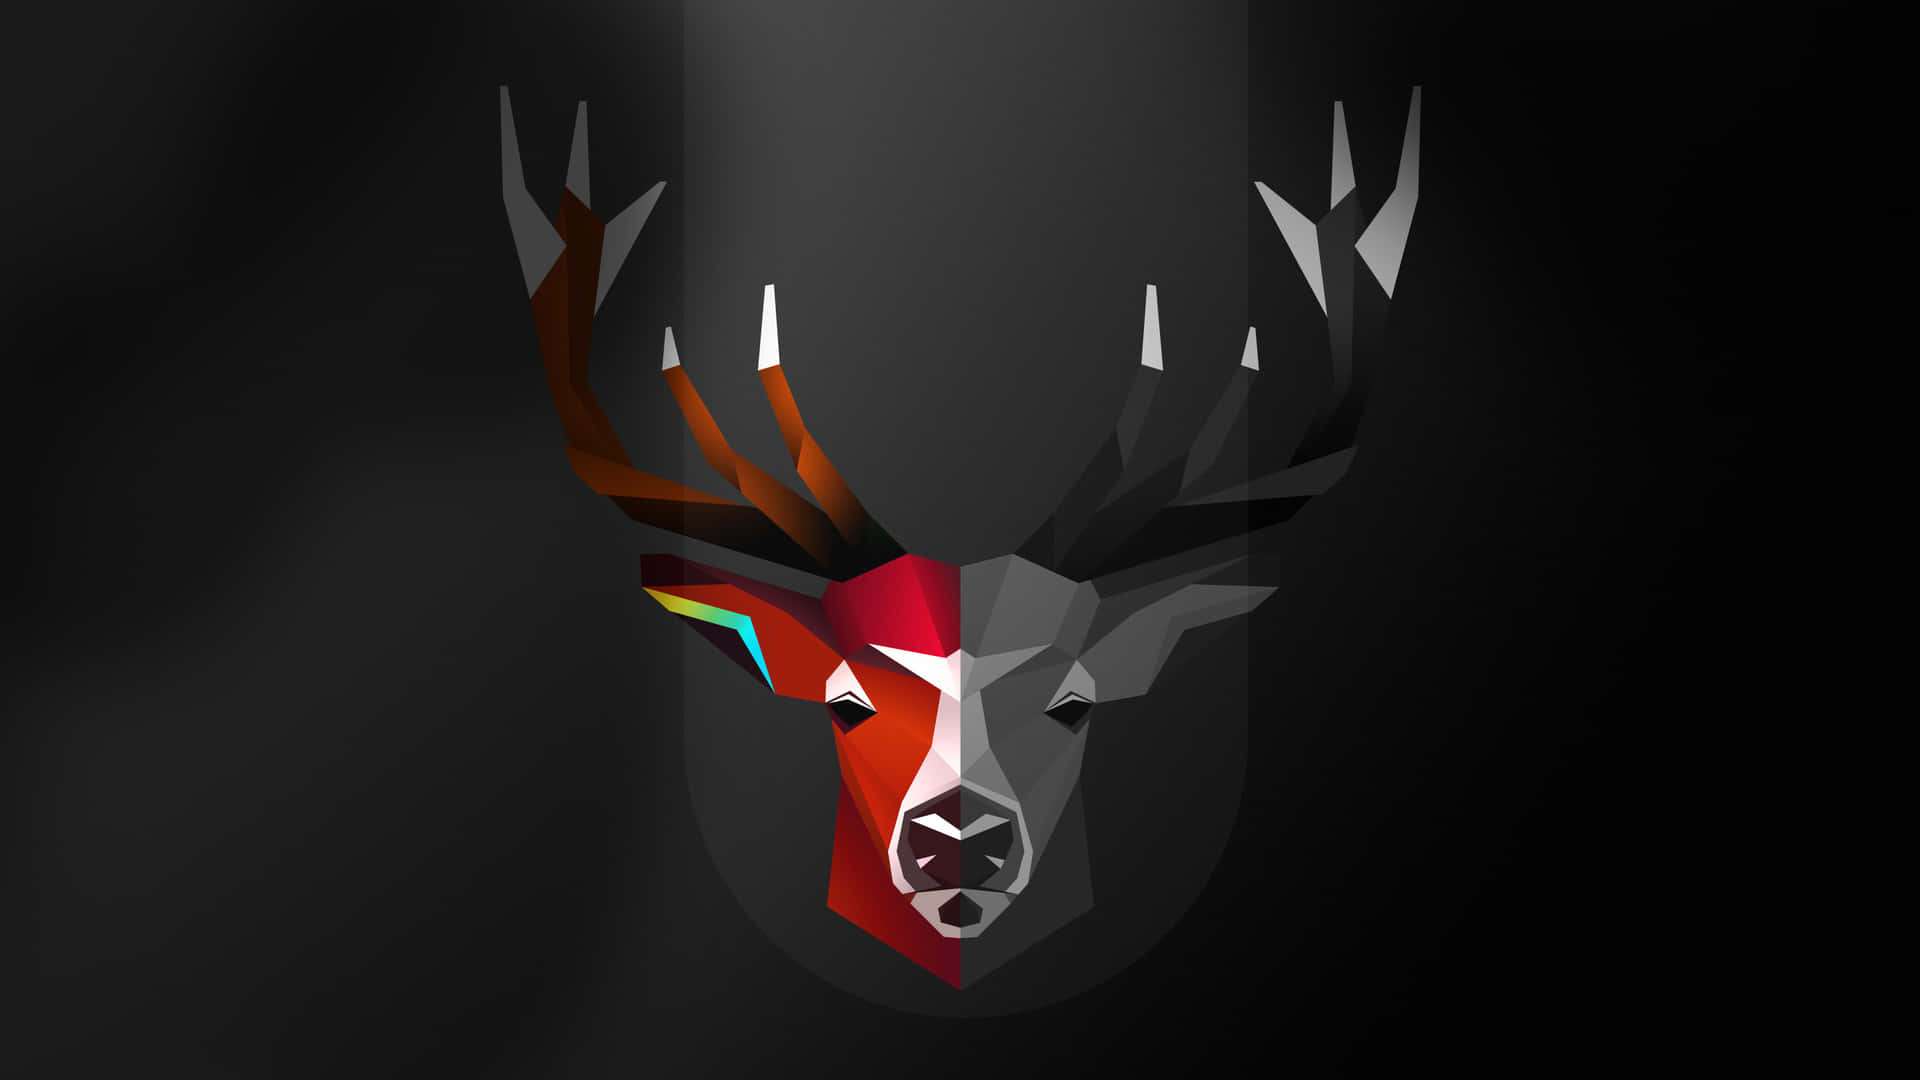 Cool Geometric Art Of Deer Head Picture